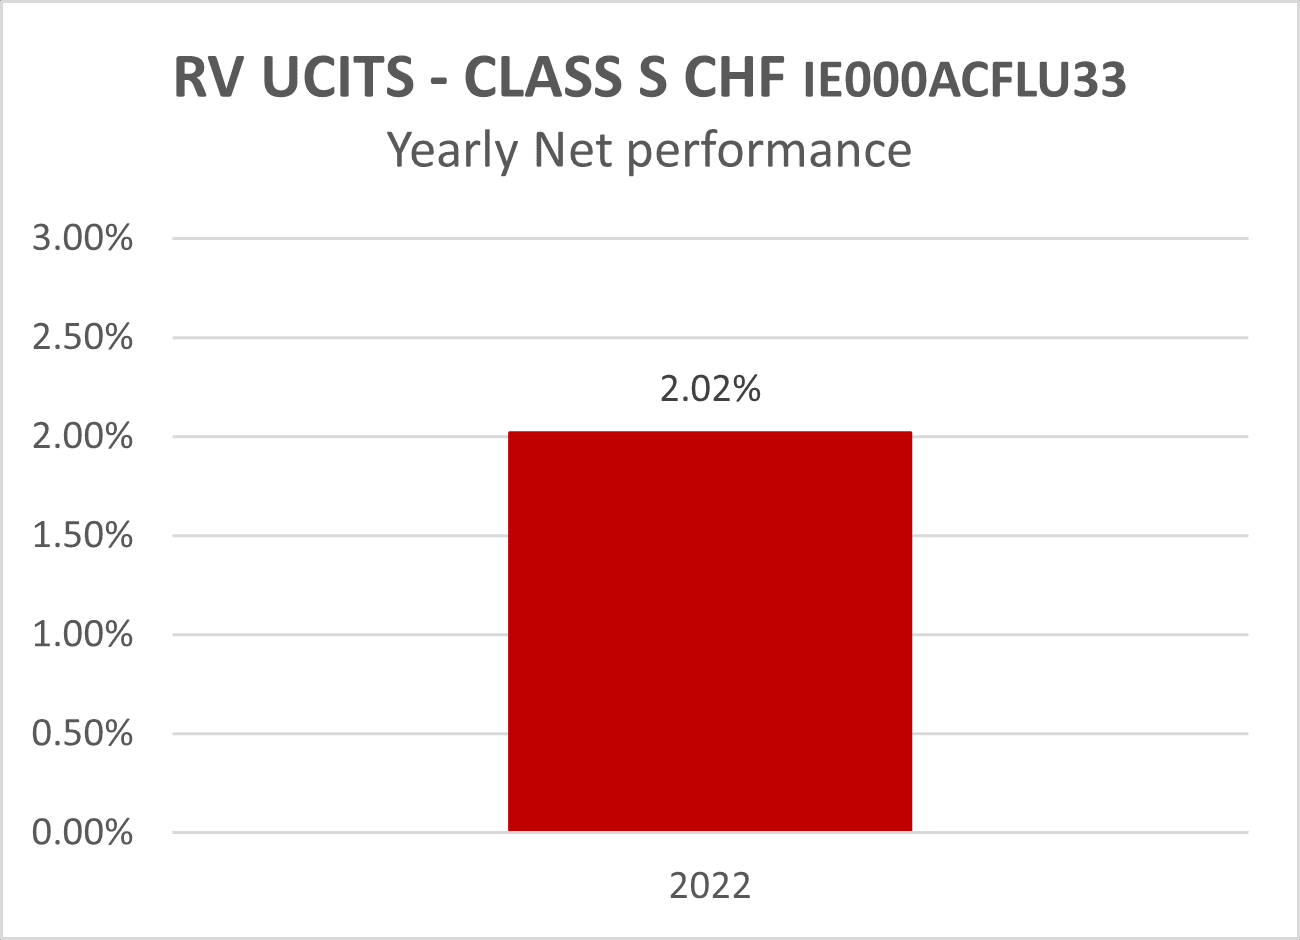 RV UCITS - CLASS S CHF IE000ACFLU33 - Yearly Net performance